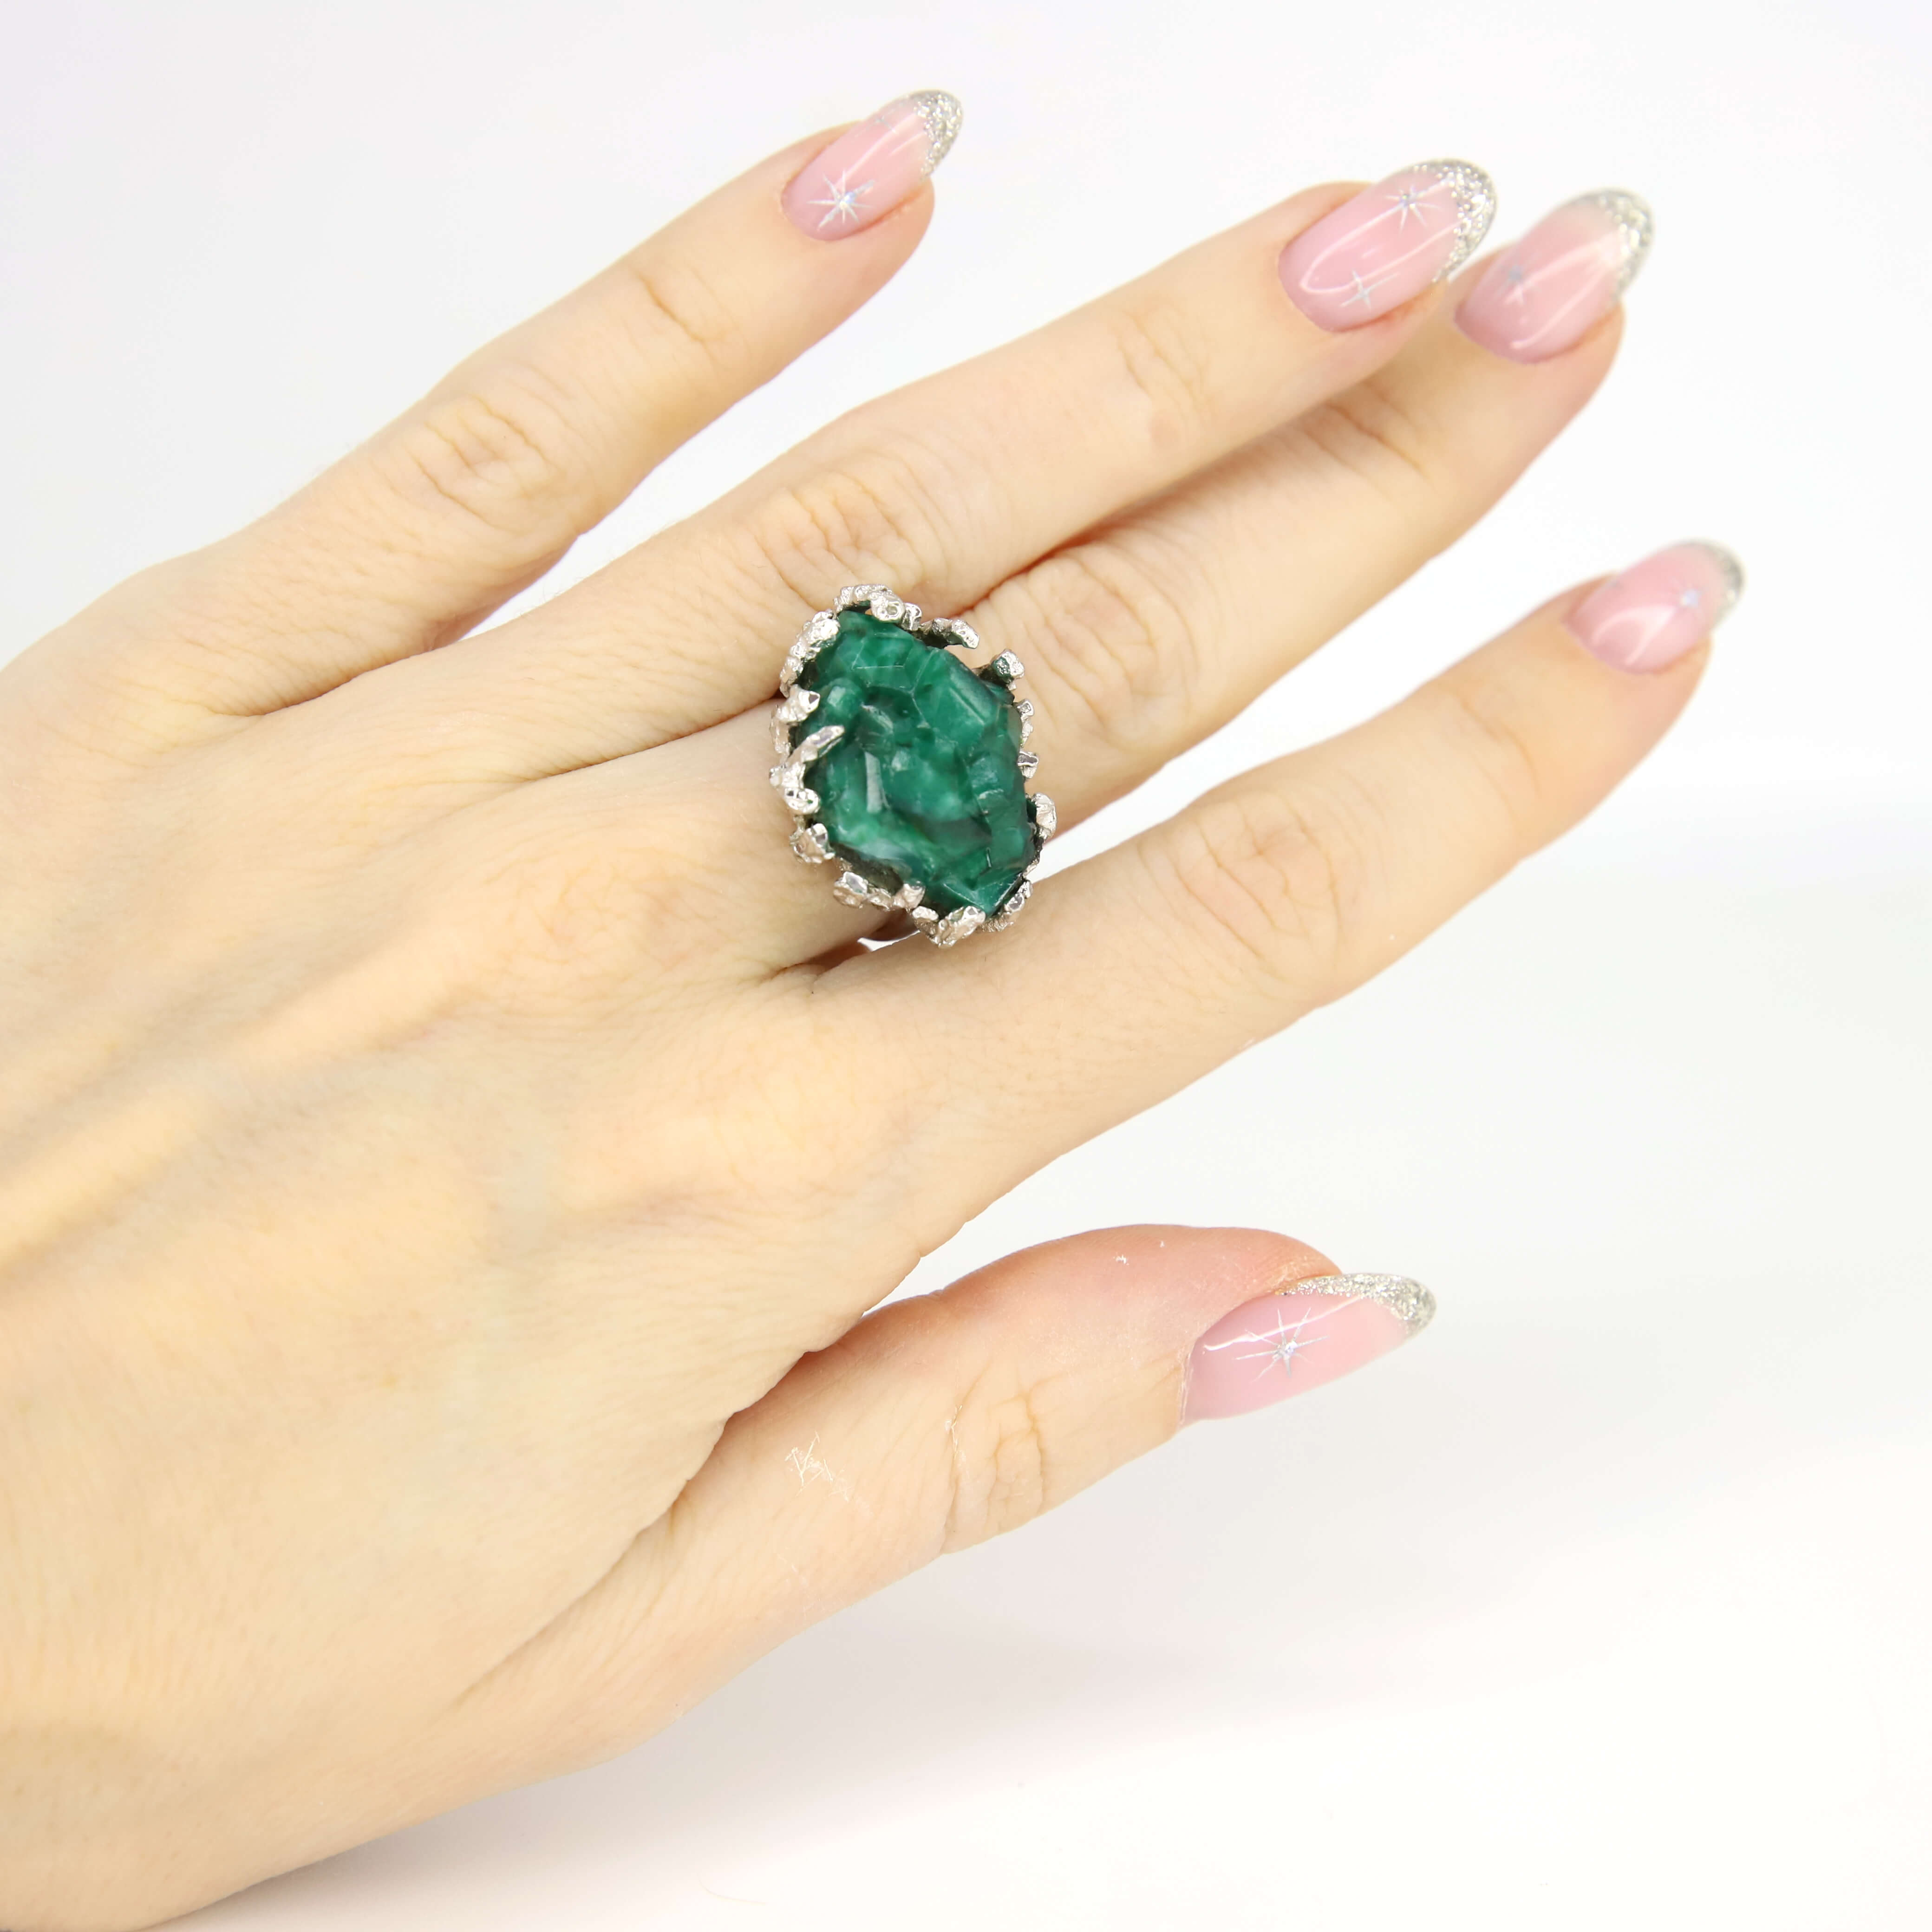 Кольцо 925 с кварцем размер 16,5, цвет Зеленый, фото 1